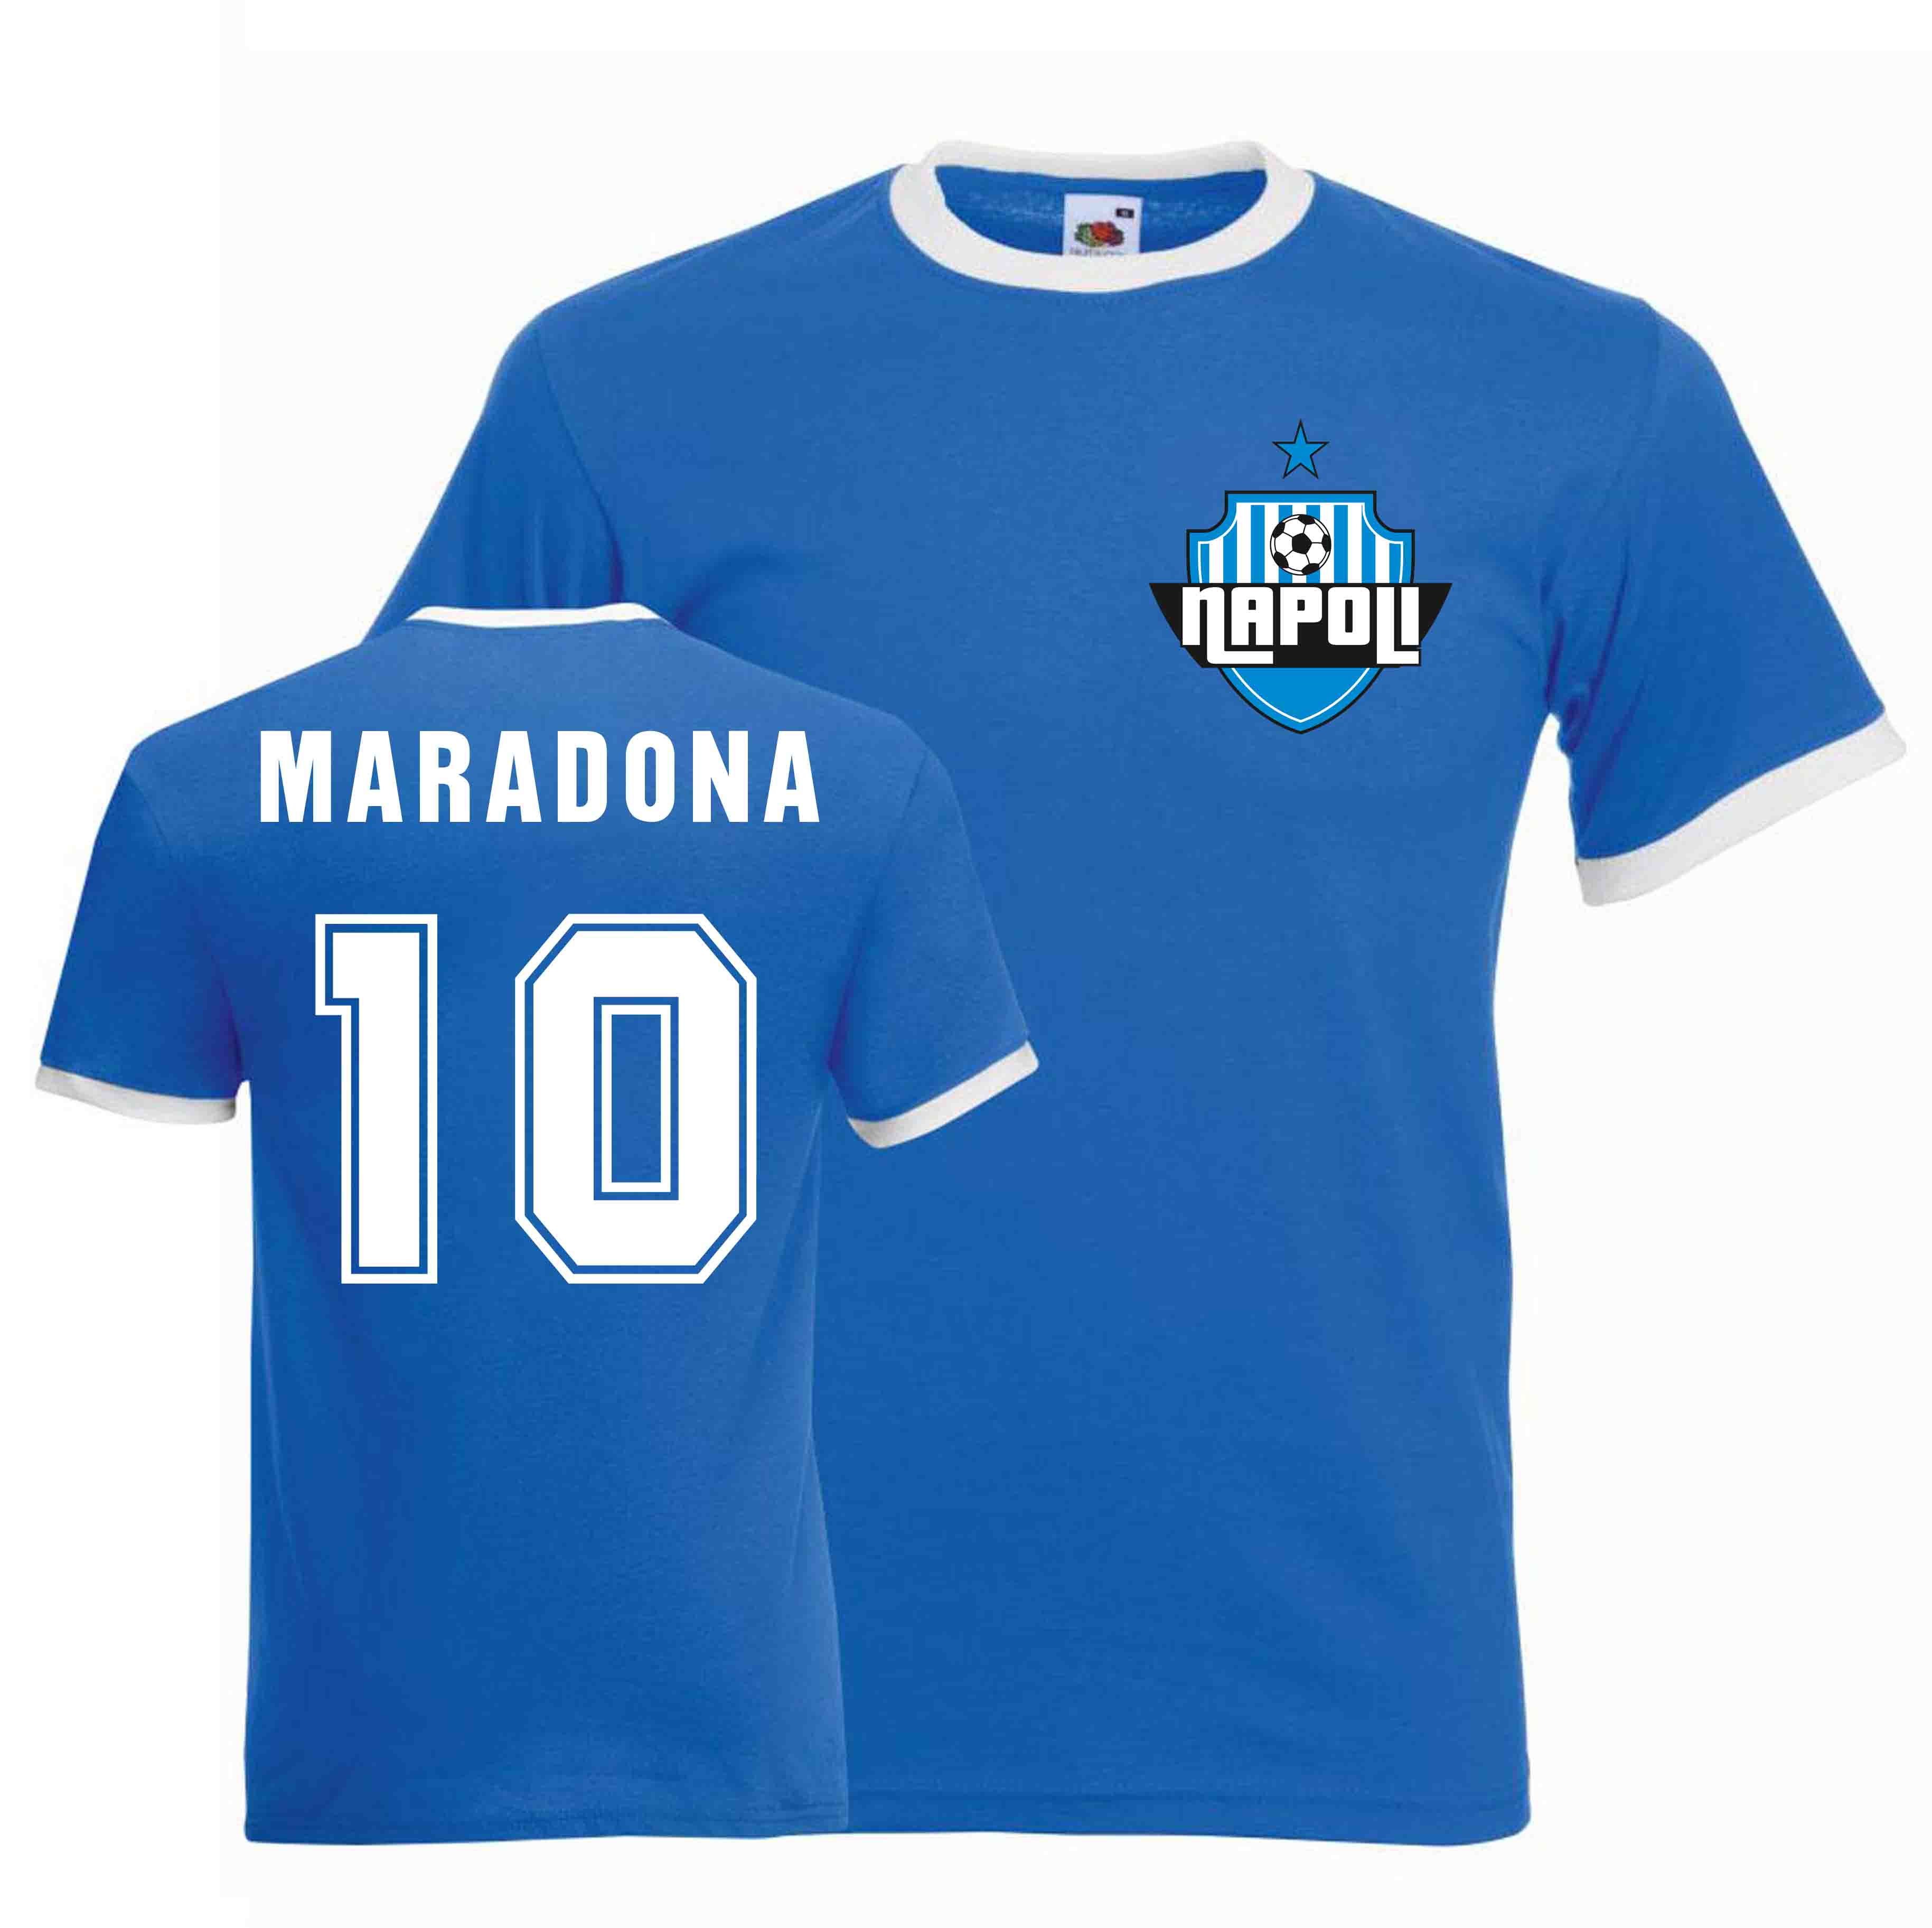 Diego Maradona Napoli Ringer Tee (blue)